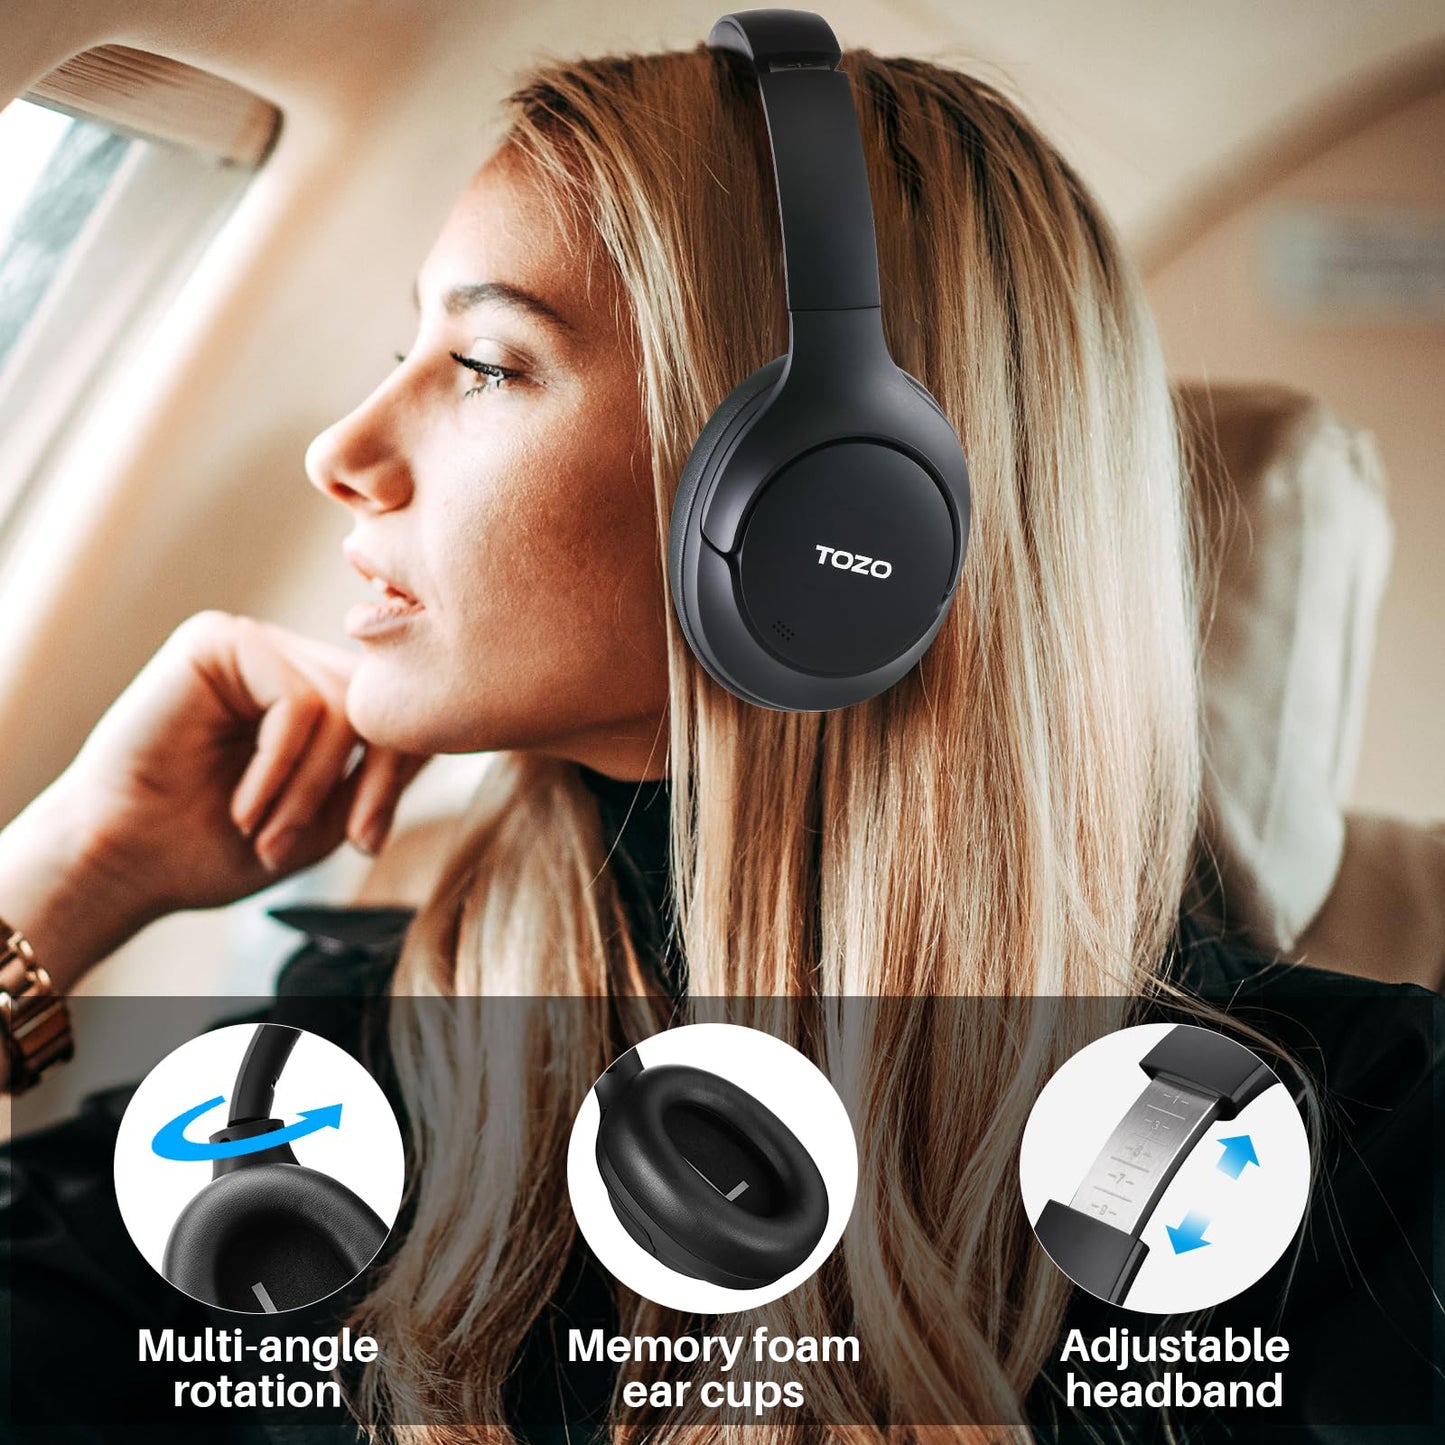 Hybrid Active Noise Cancelling Headphones